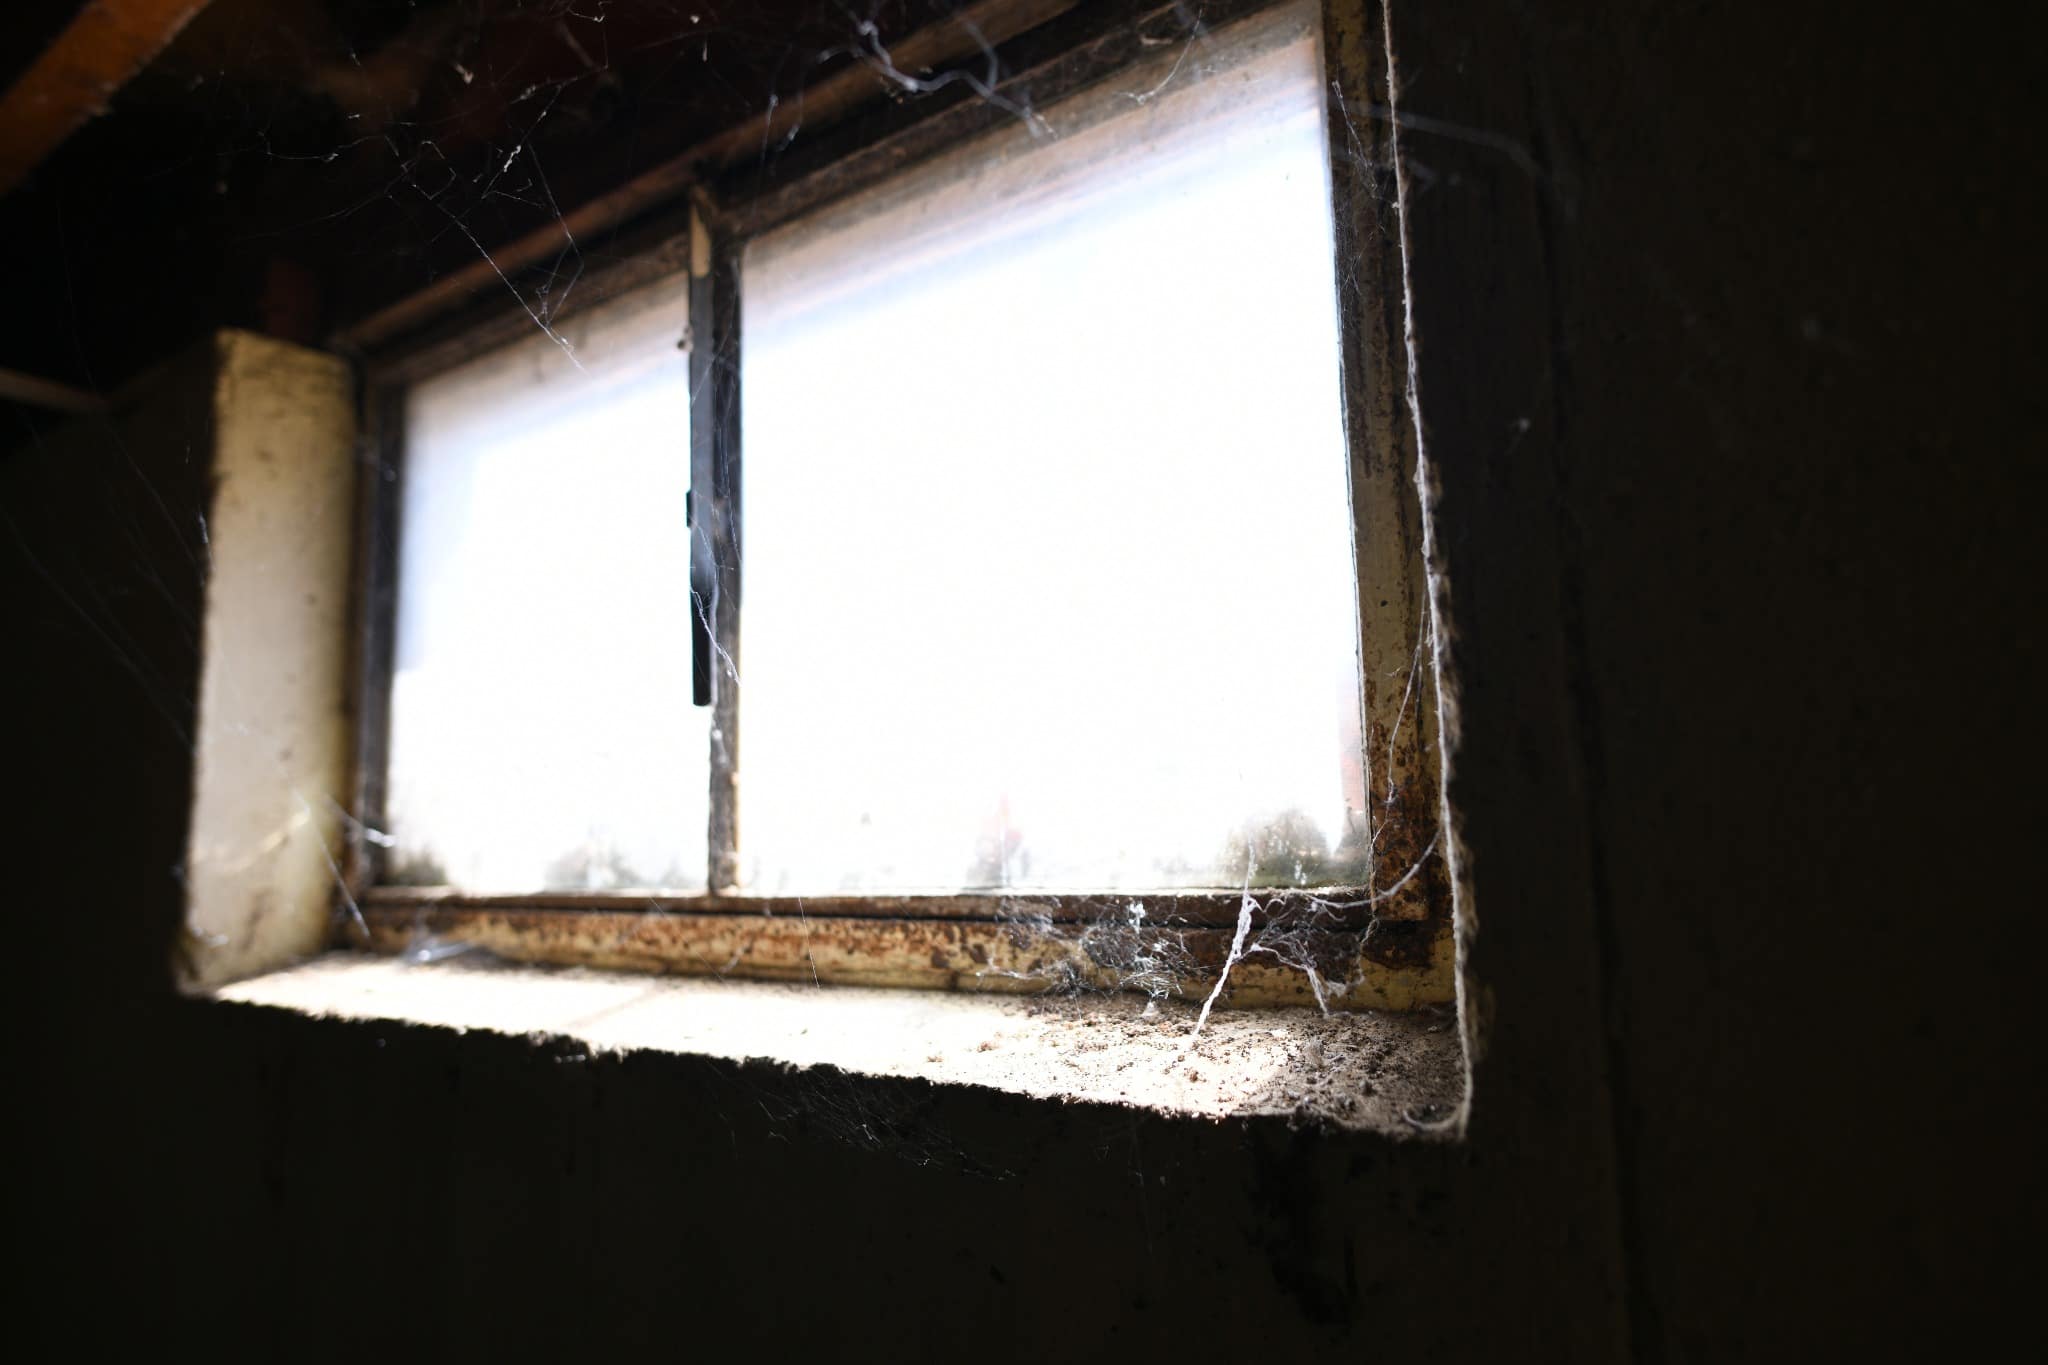 A basement window with cobwebs.